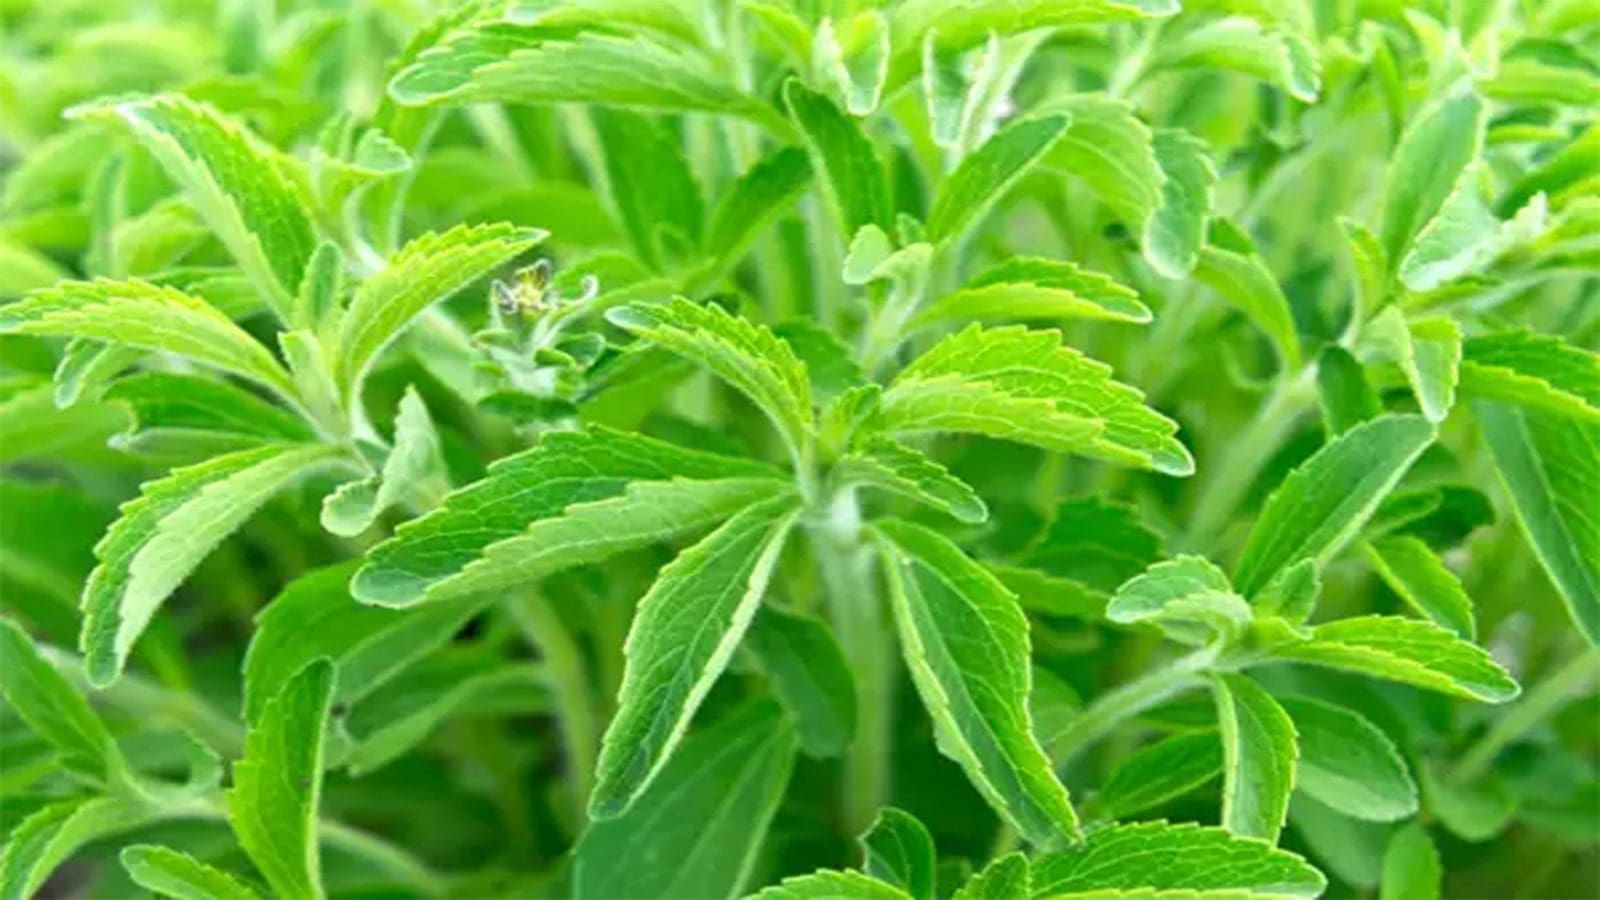 Food Standards Australia New Zealand marks stevia sweeteners as safe